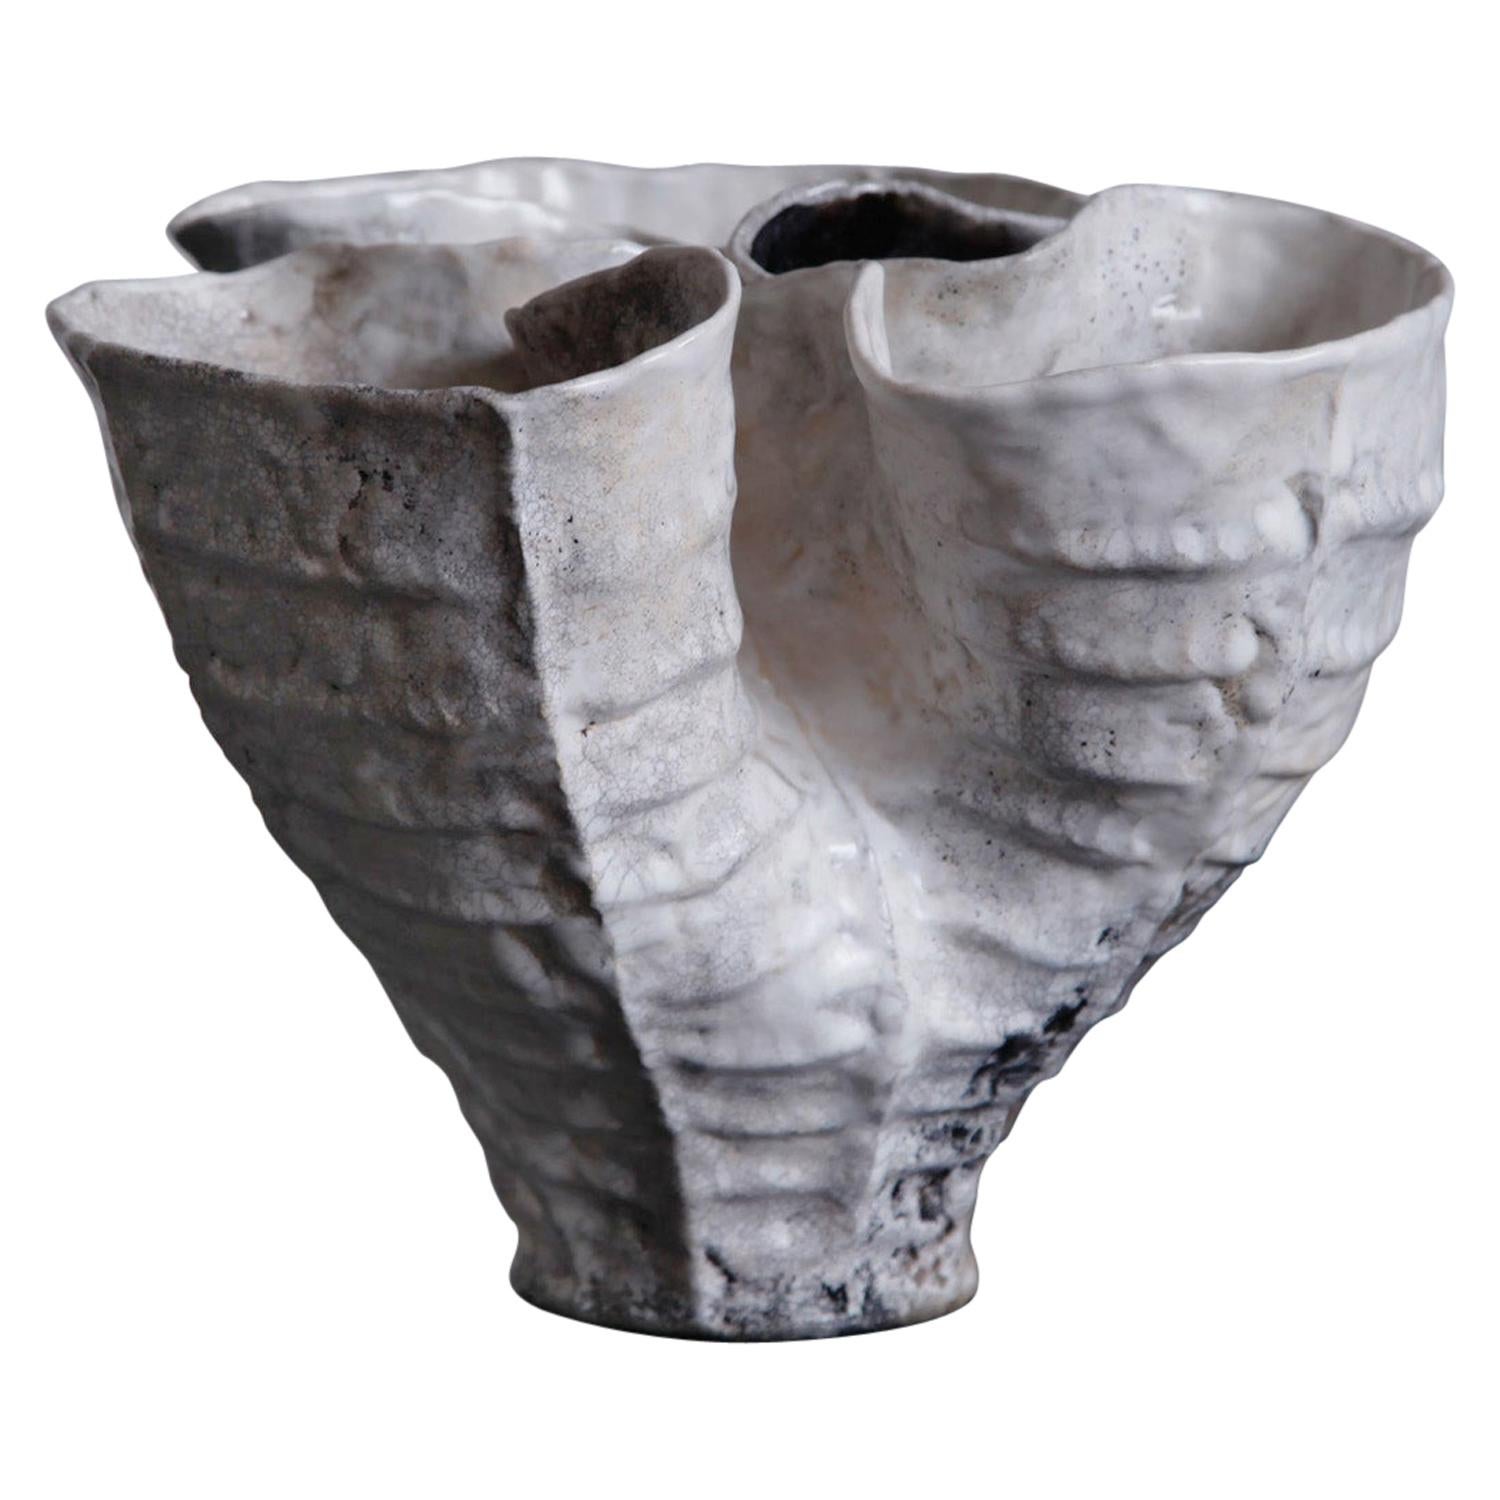 Pit-Fired Biomorphic Stoneware Vessel by Ceramicist Young Mi Kim For Sale